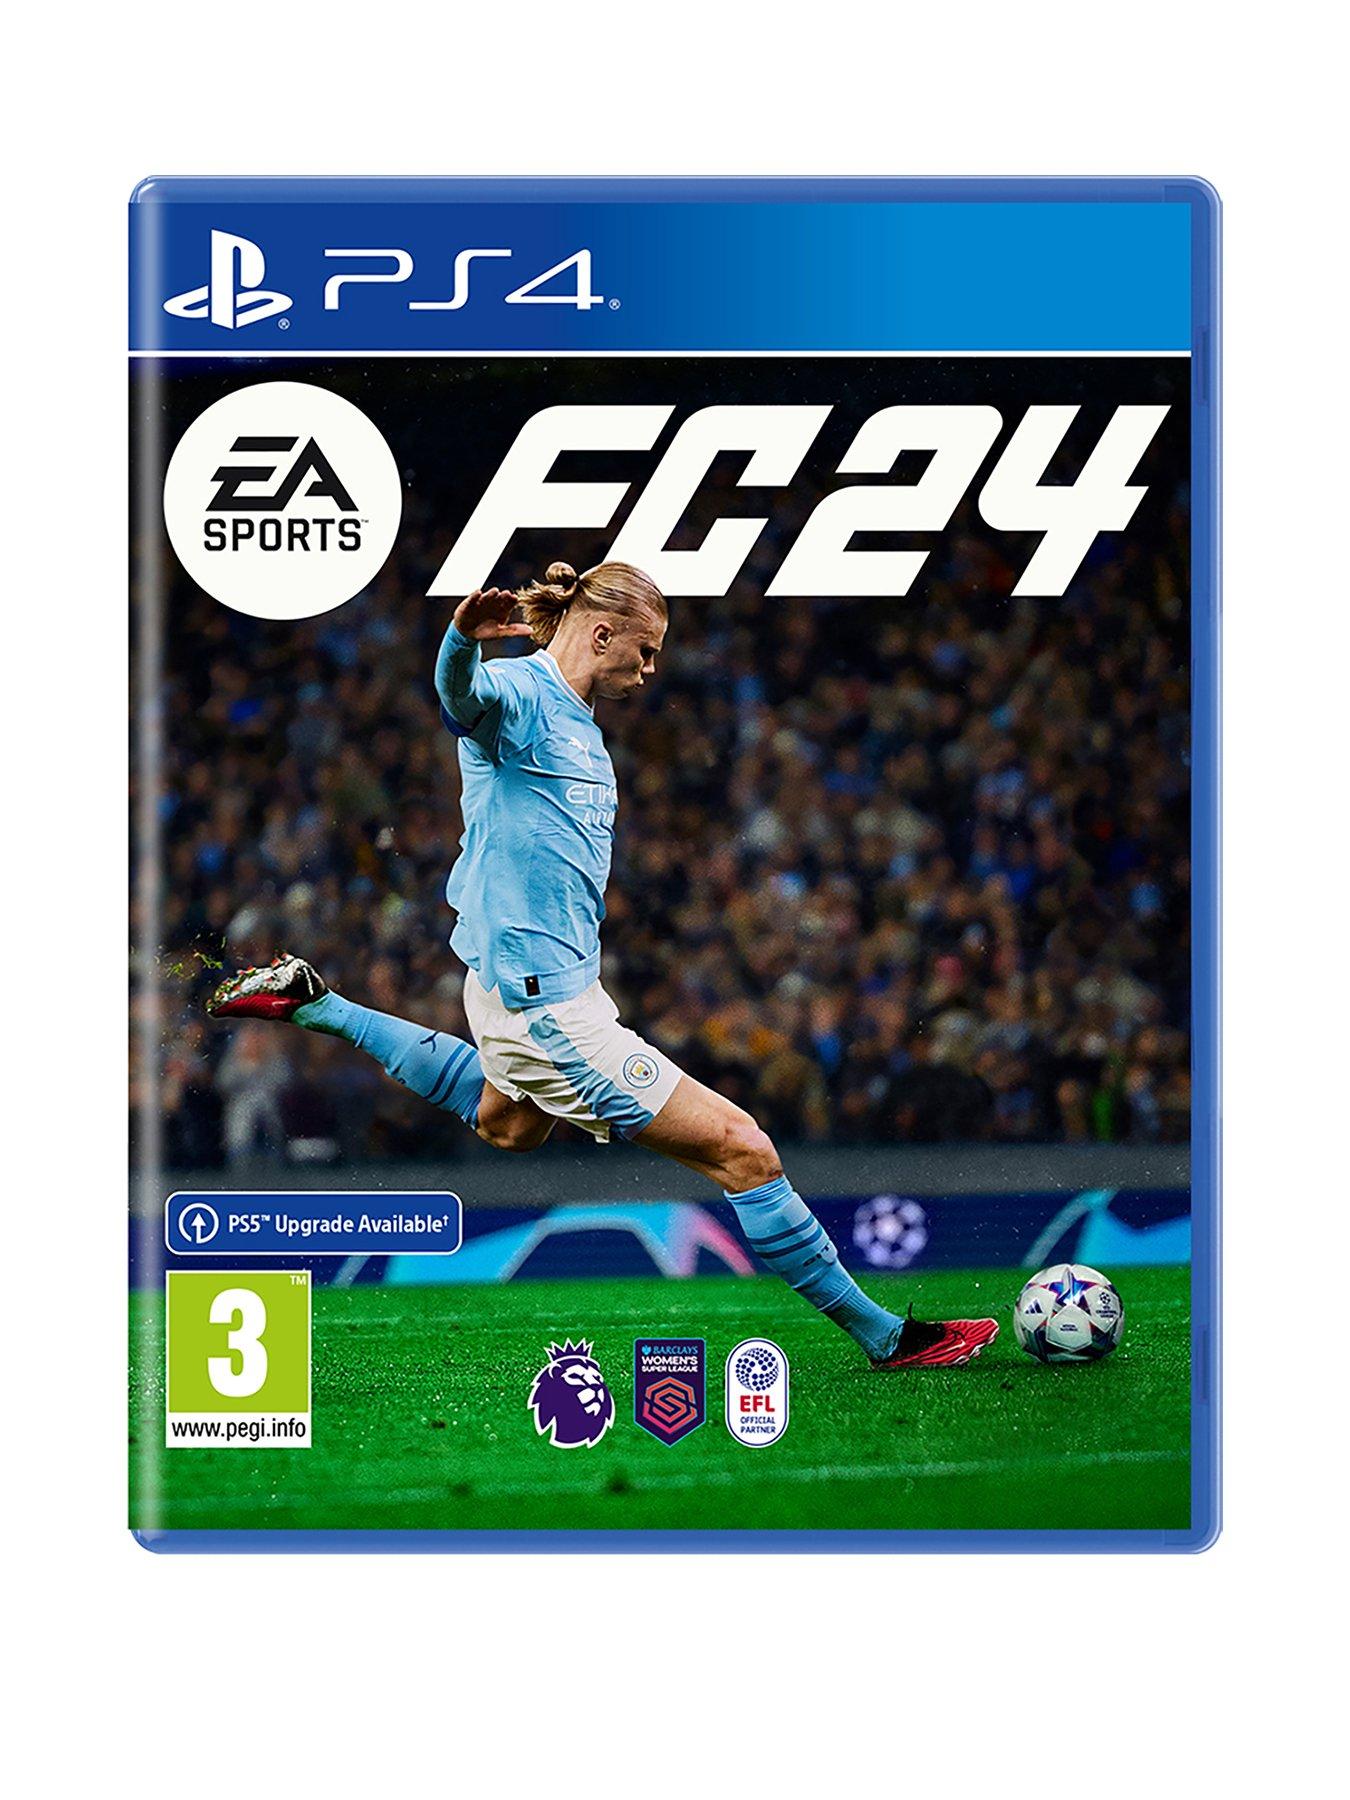 EA SPORTS FIFA 23 Full Game Free Version Xbox 360 Setup Download - Hut  Mobile